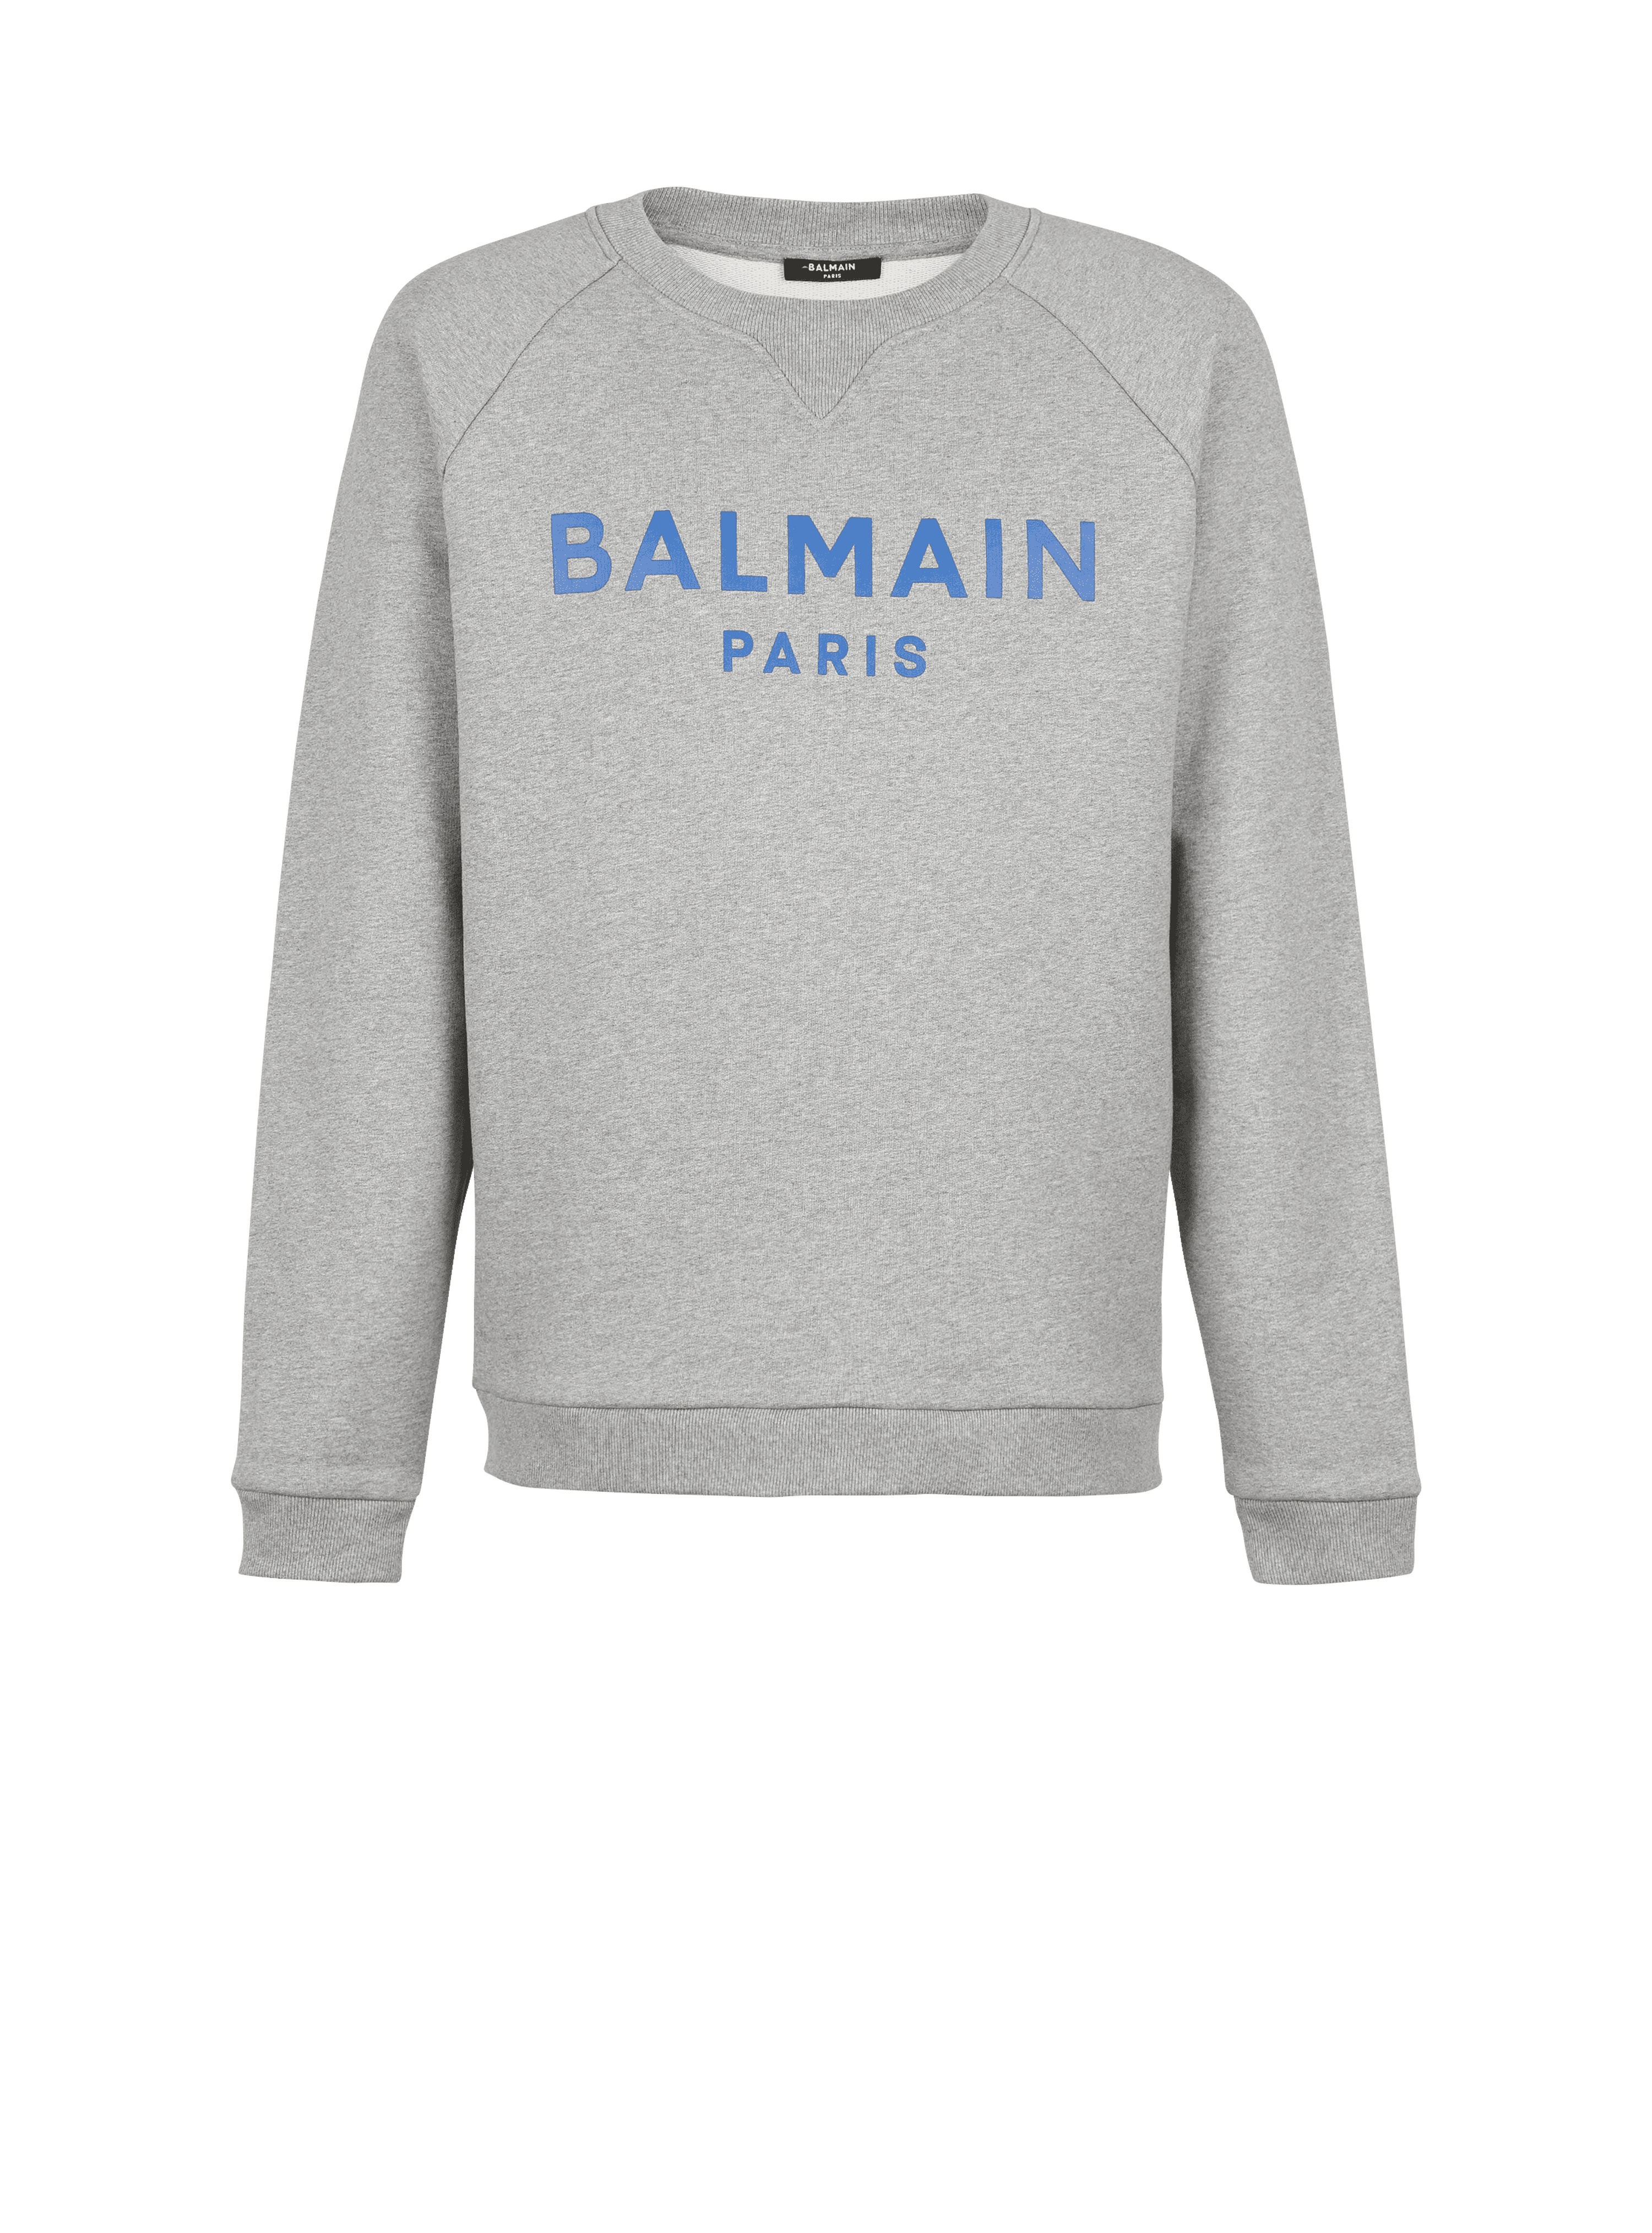 EXCLUSIVE - Cotton sweatshirt with Balmain Paris logo print, grey, hi-res